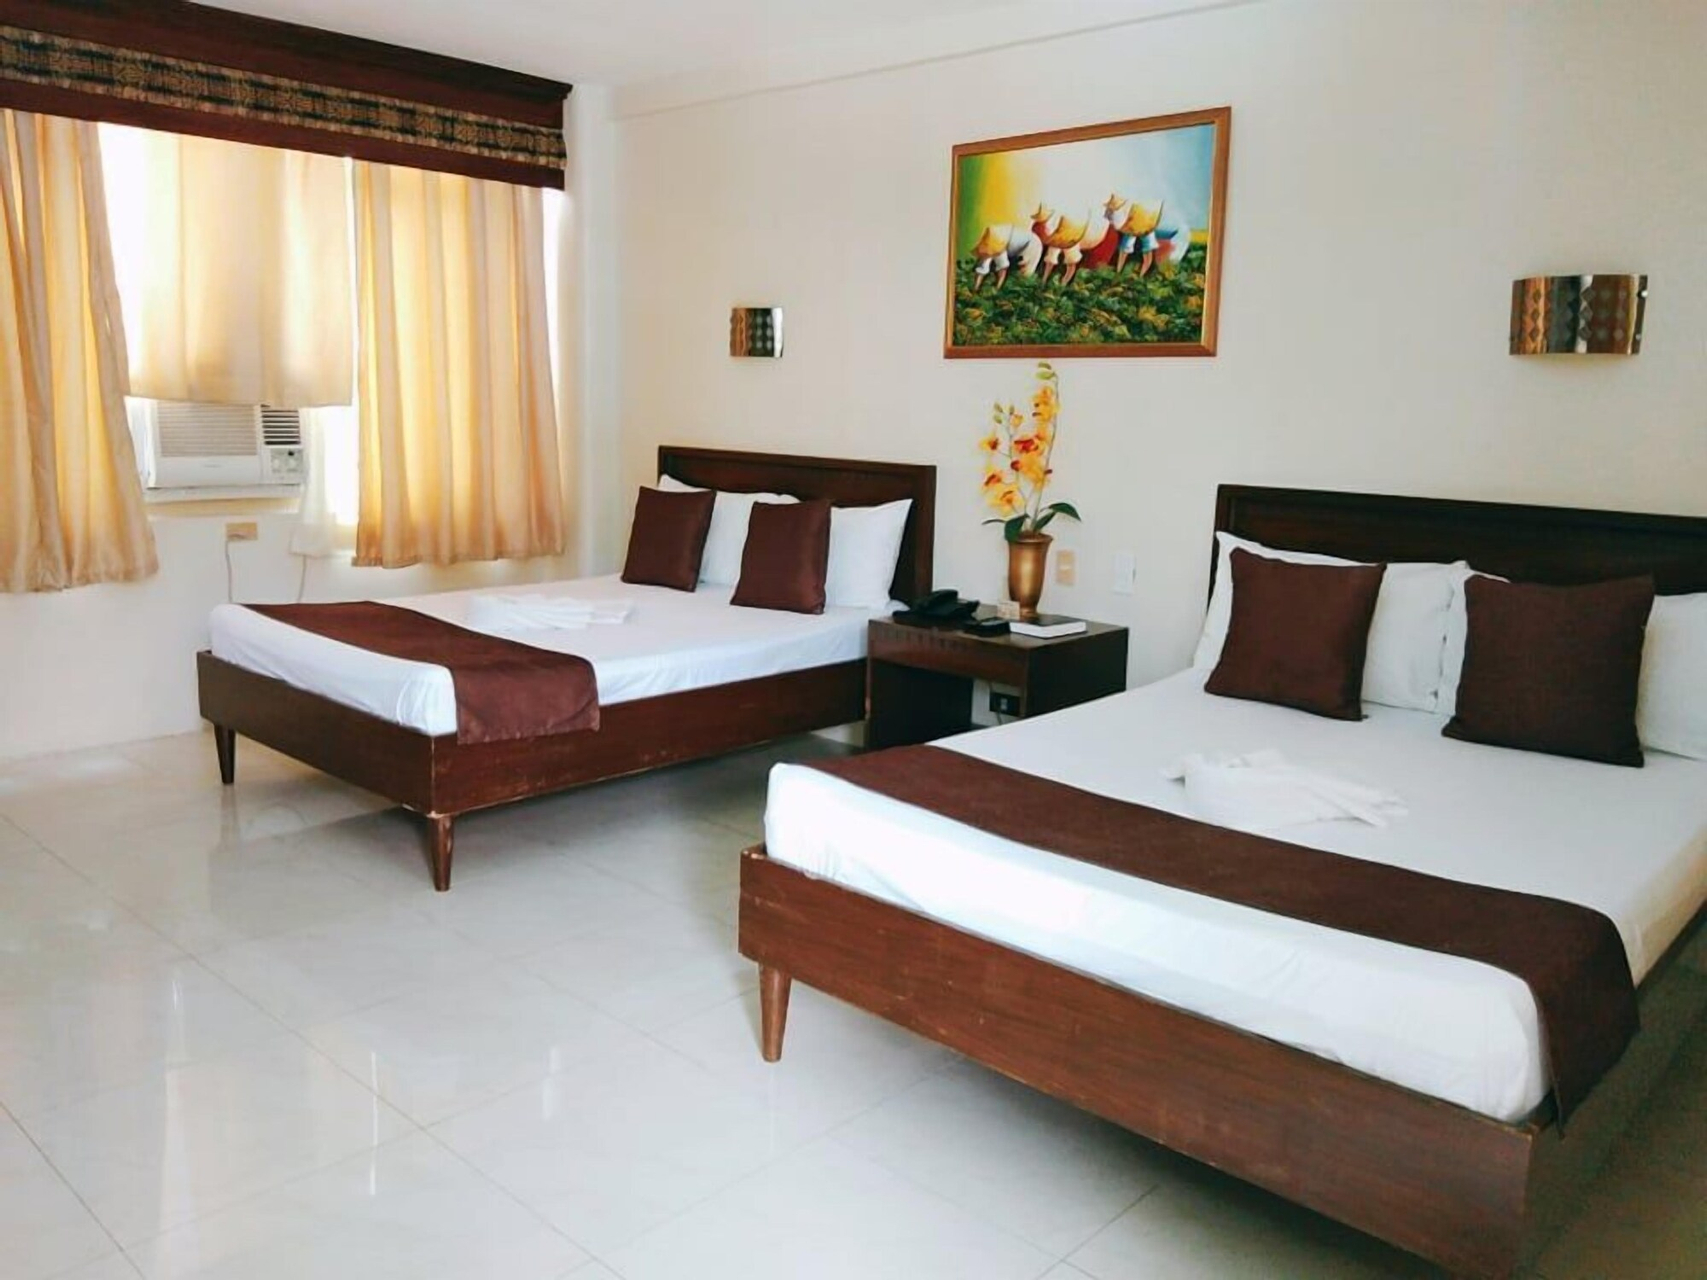 Bedroom 3, Splash Oasis Resort Hotel, Los Baños